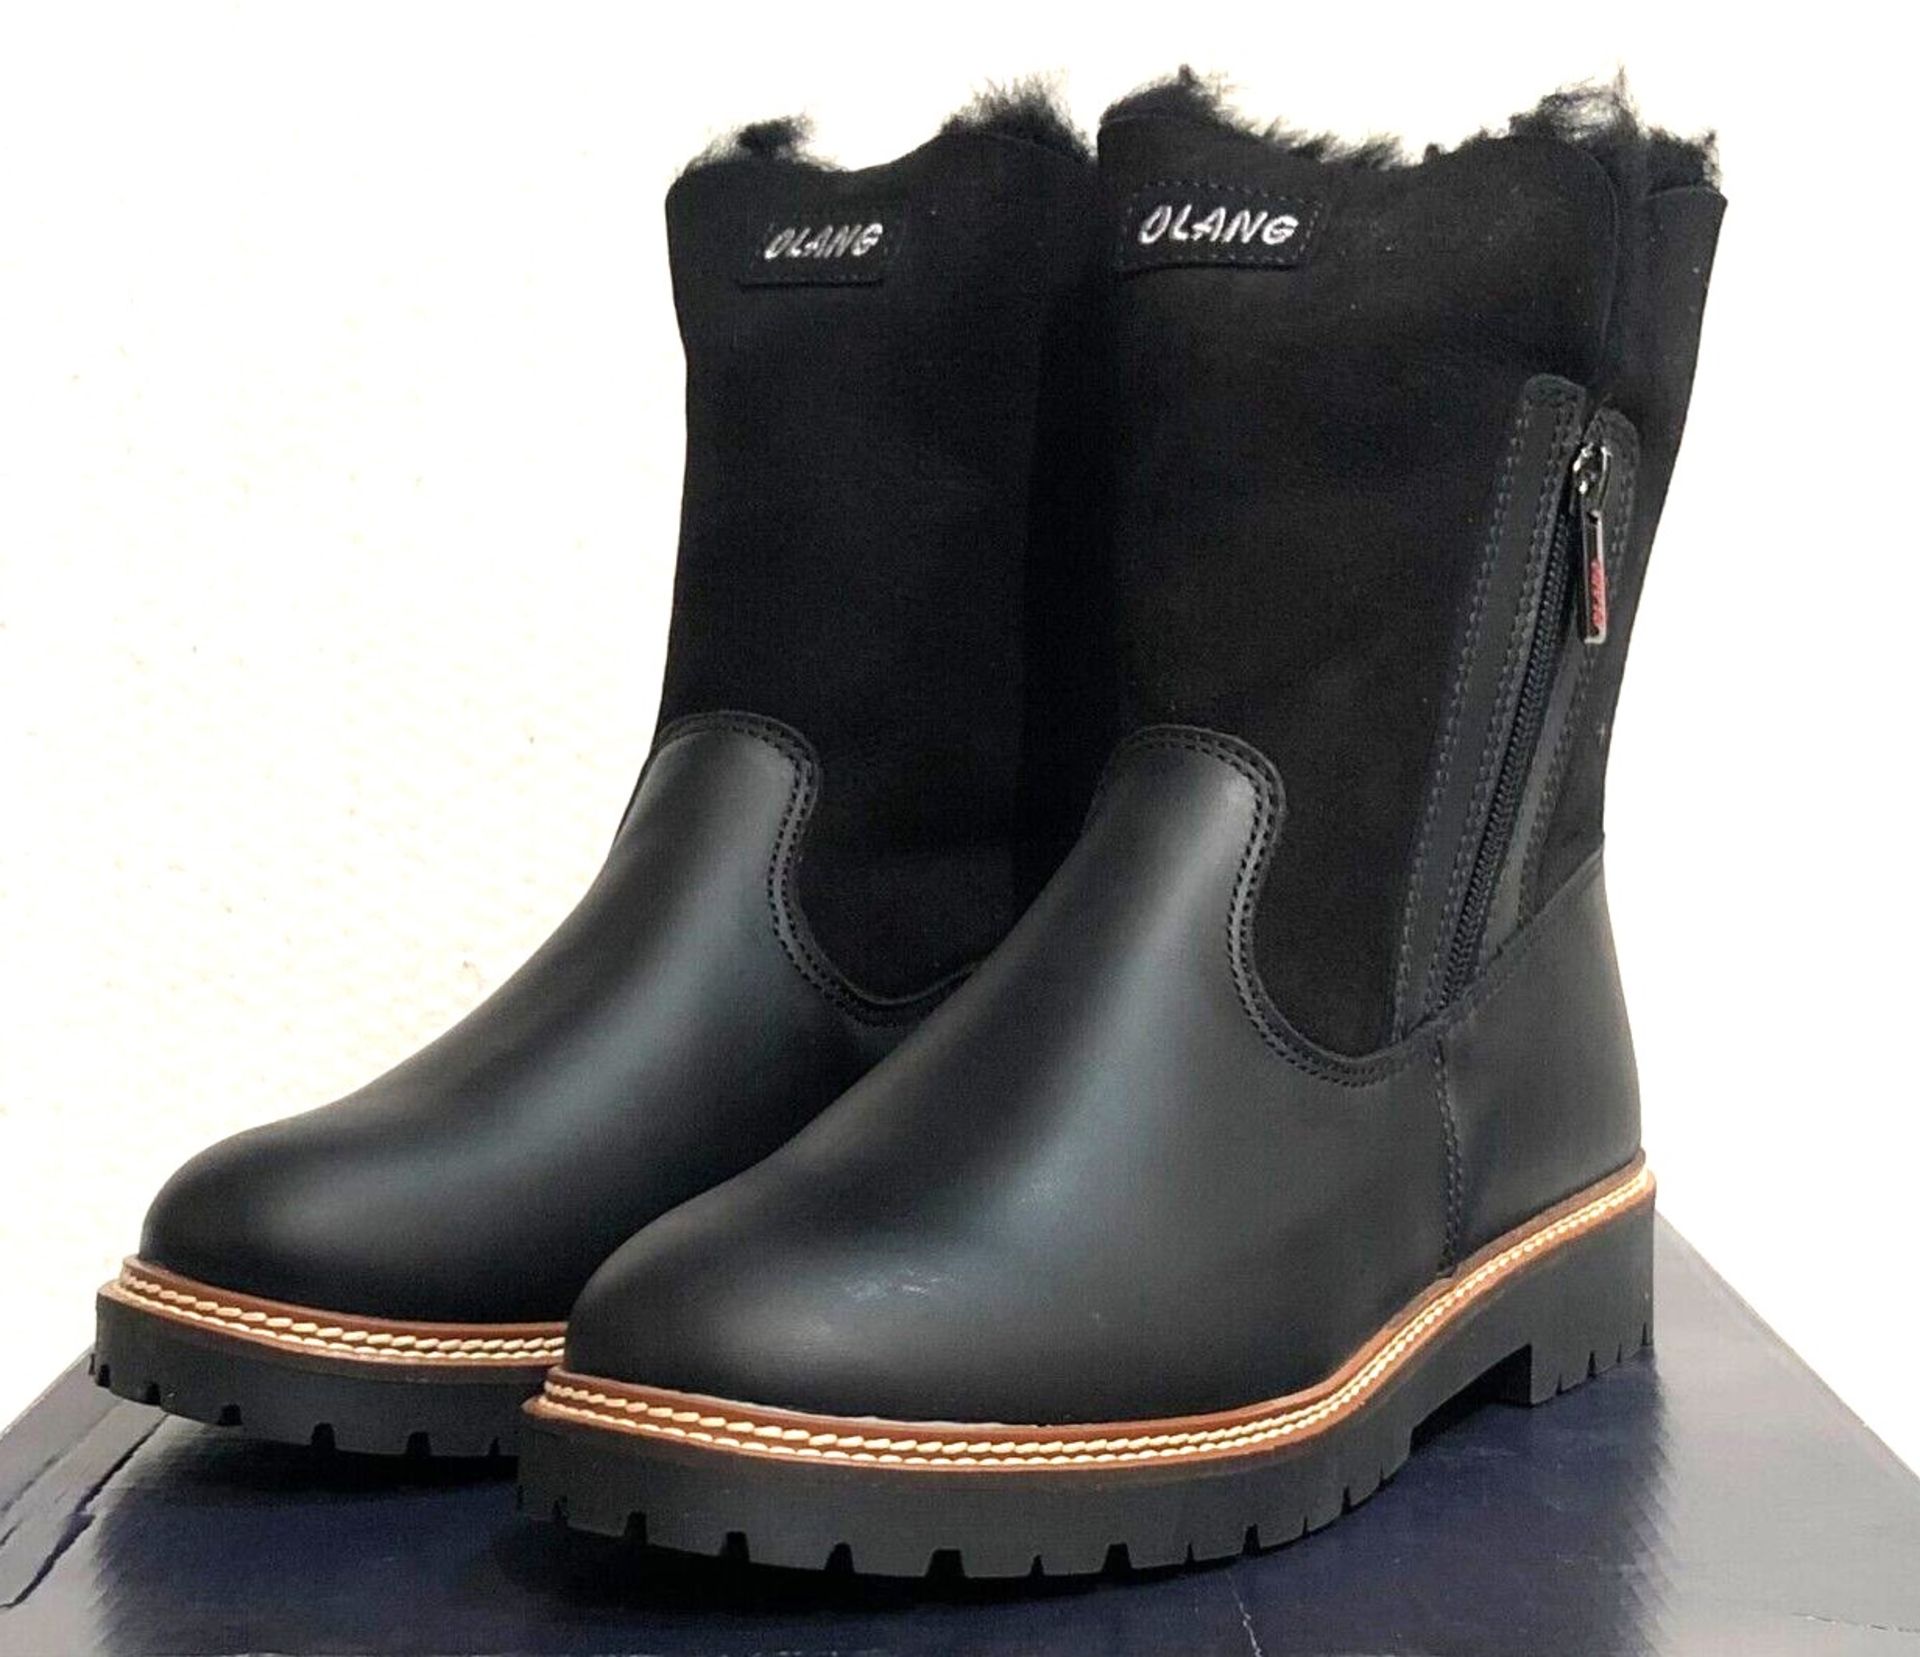 1 x Pair of Designer Olang Women's Winter Boots - Debora 81 Nero - Euro Size 36 - New Boxed - Image 2 of 2